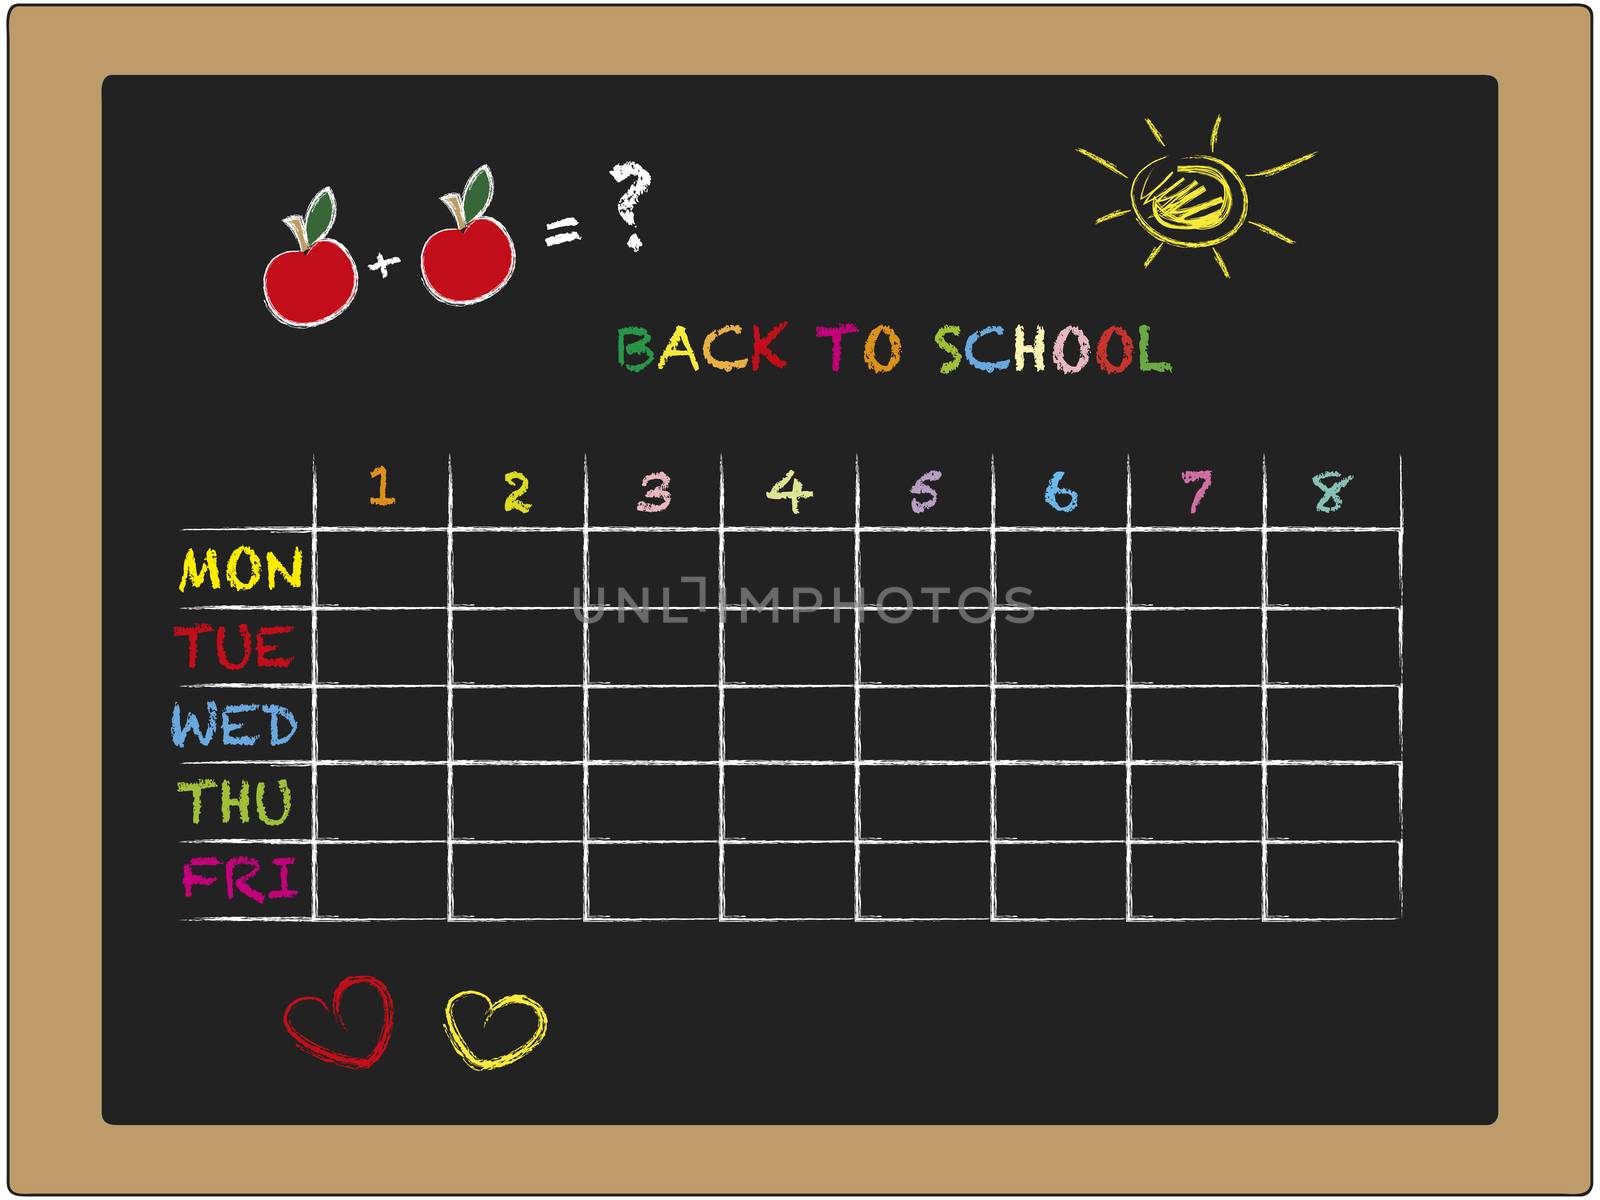 illustration of school timetable with blackboard